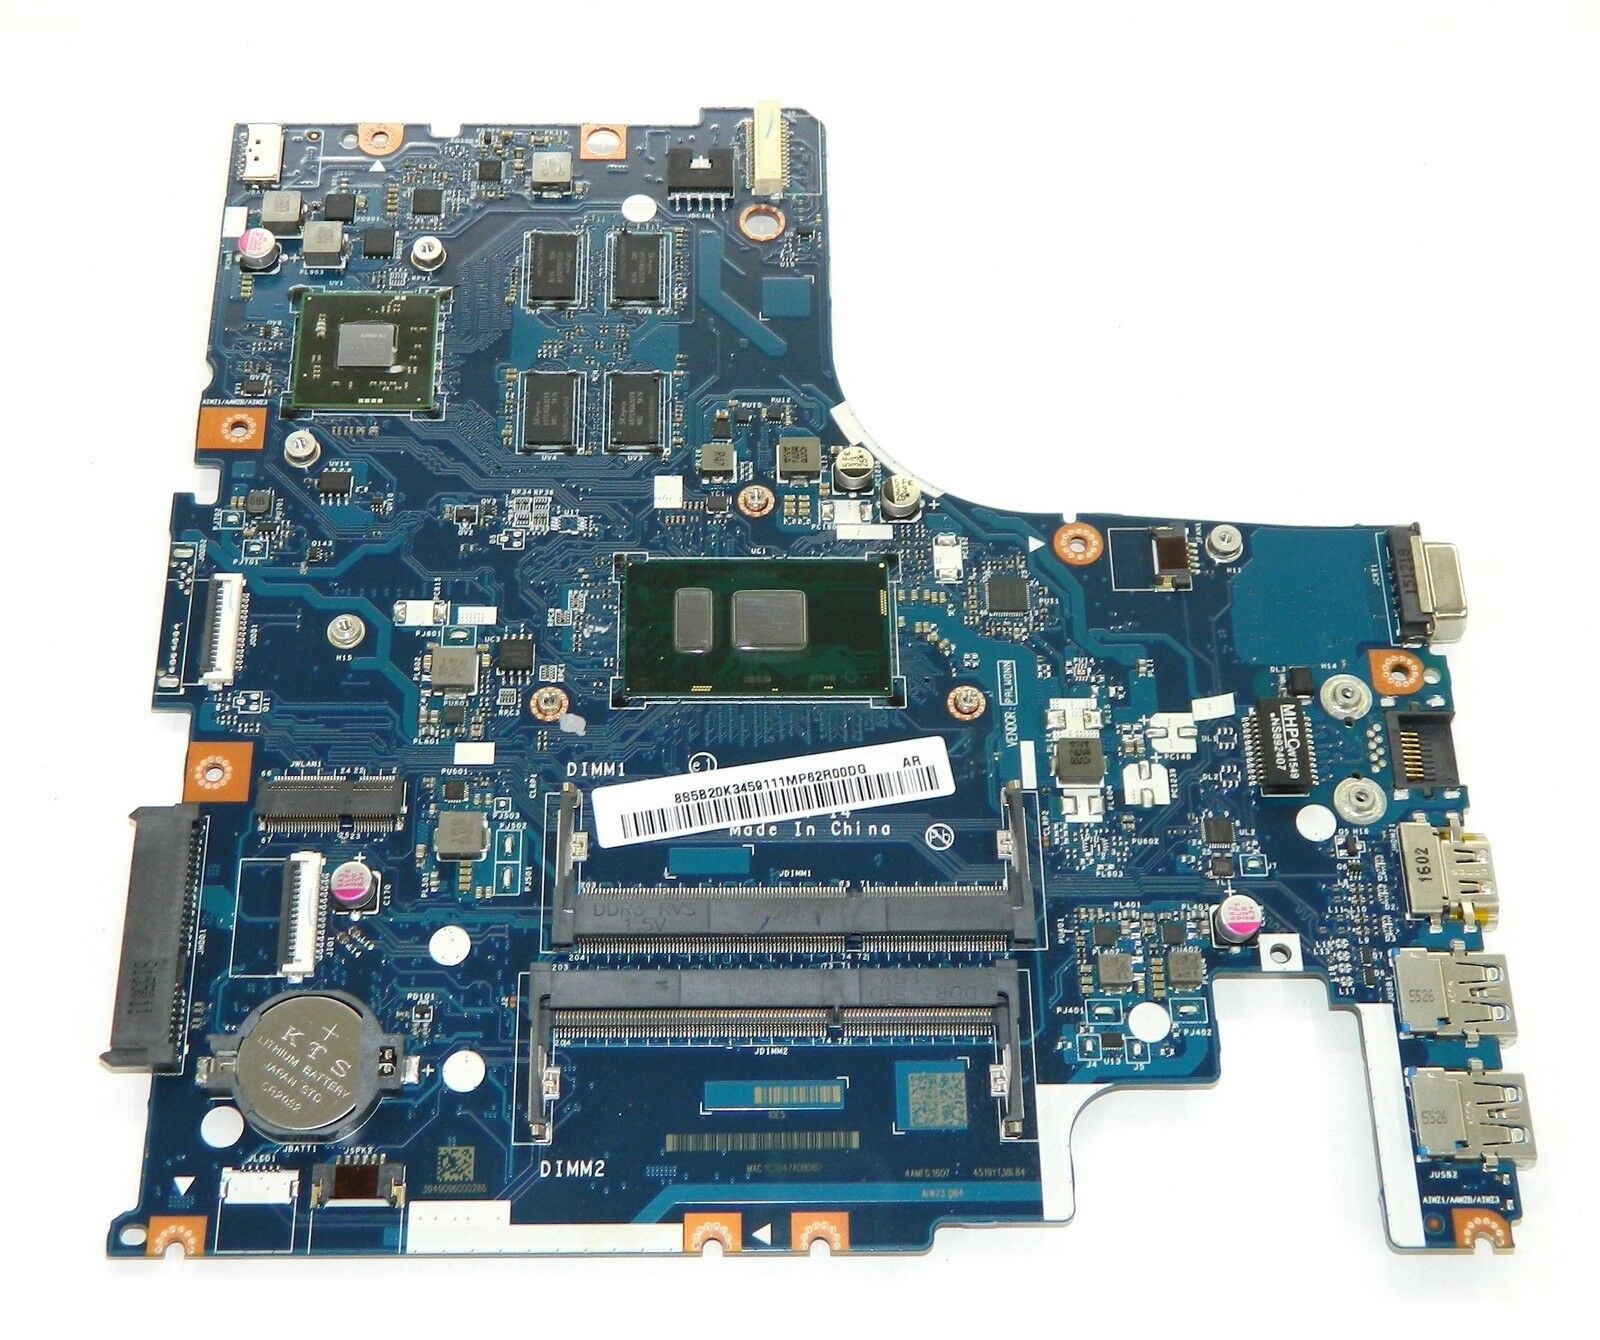 LENOVO 500-15ISK i7-6500U LAPTOP MOTHERBOARD MAINBOARD 5B20K34591 Compatible CPU Brand: Intel MPN: 5B20K3